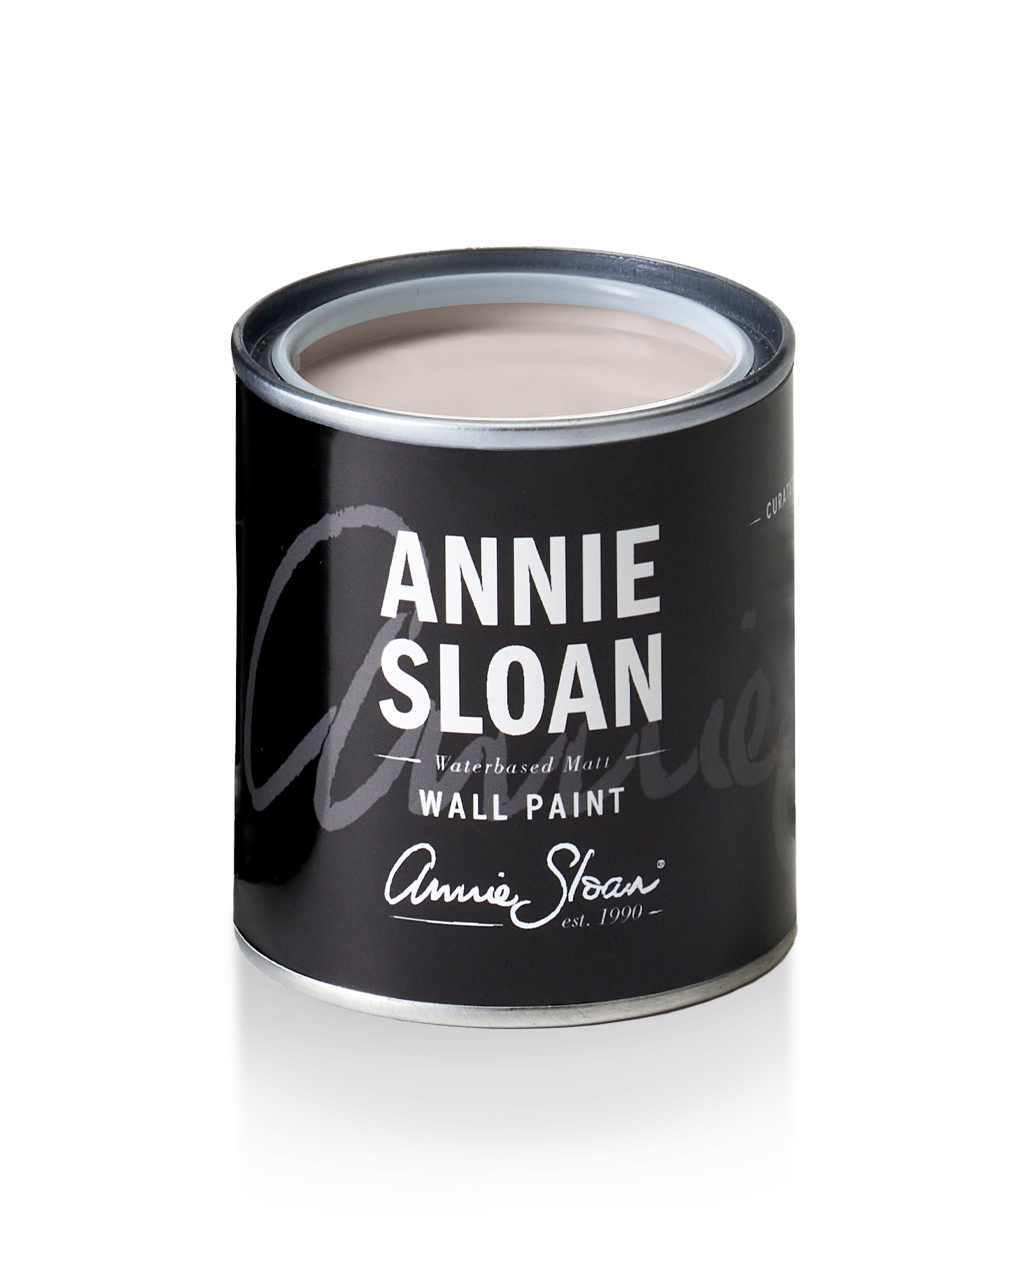 Annie Sloan Wall Paint® – Adelphi - Gaudy & Prim